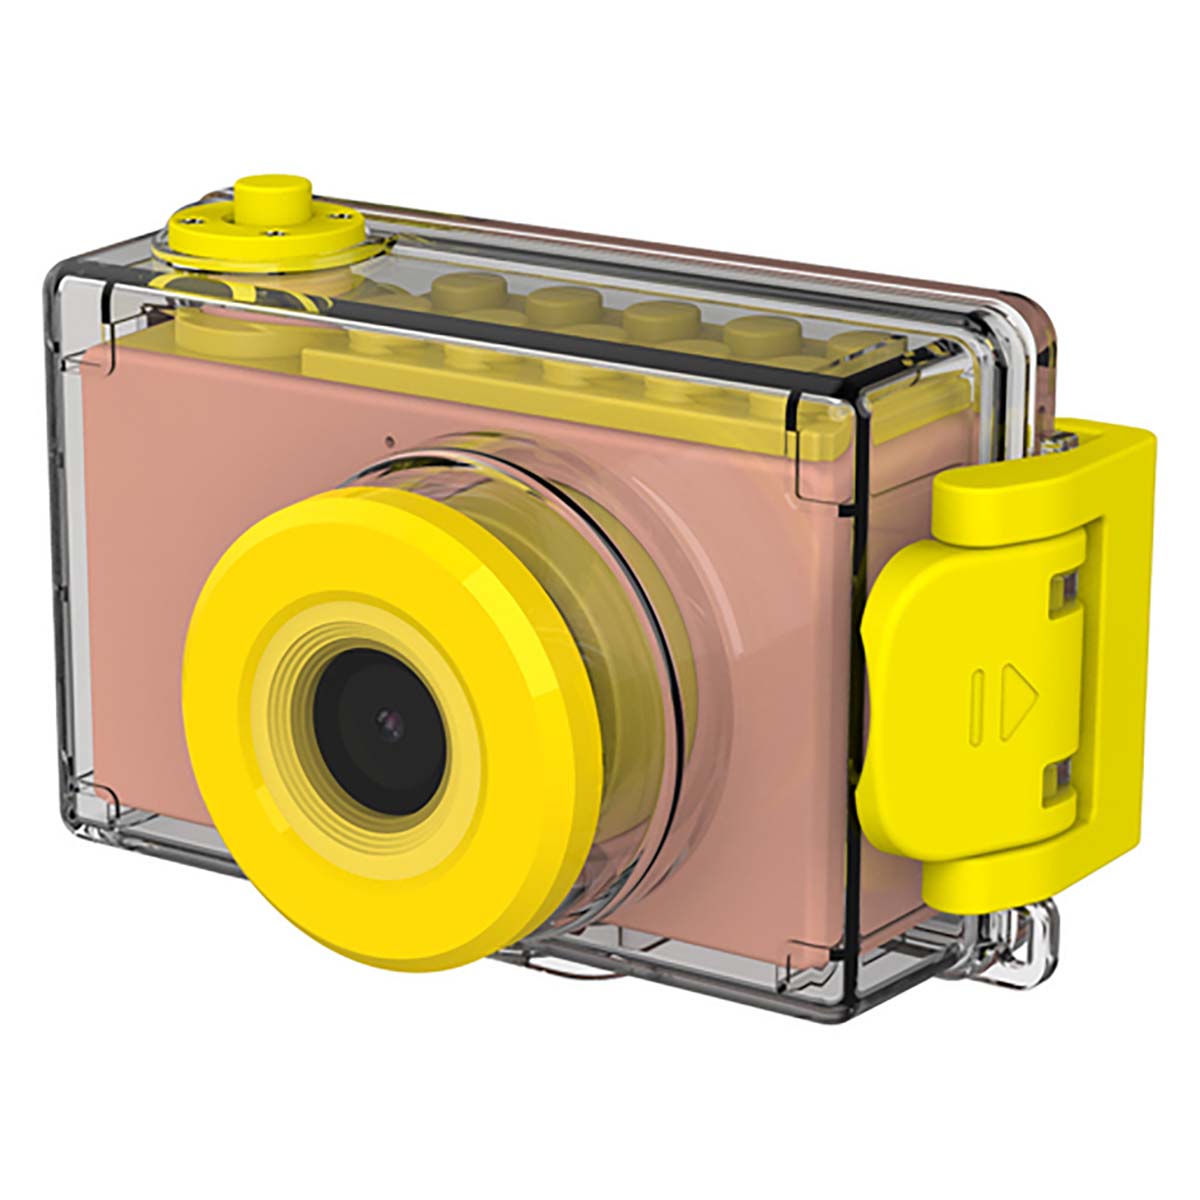 MyFirst Camera 2 Pink inkl.16 GB microSD Speicherkarte und Kartenadapter